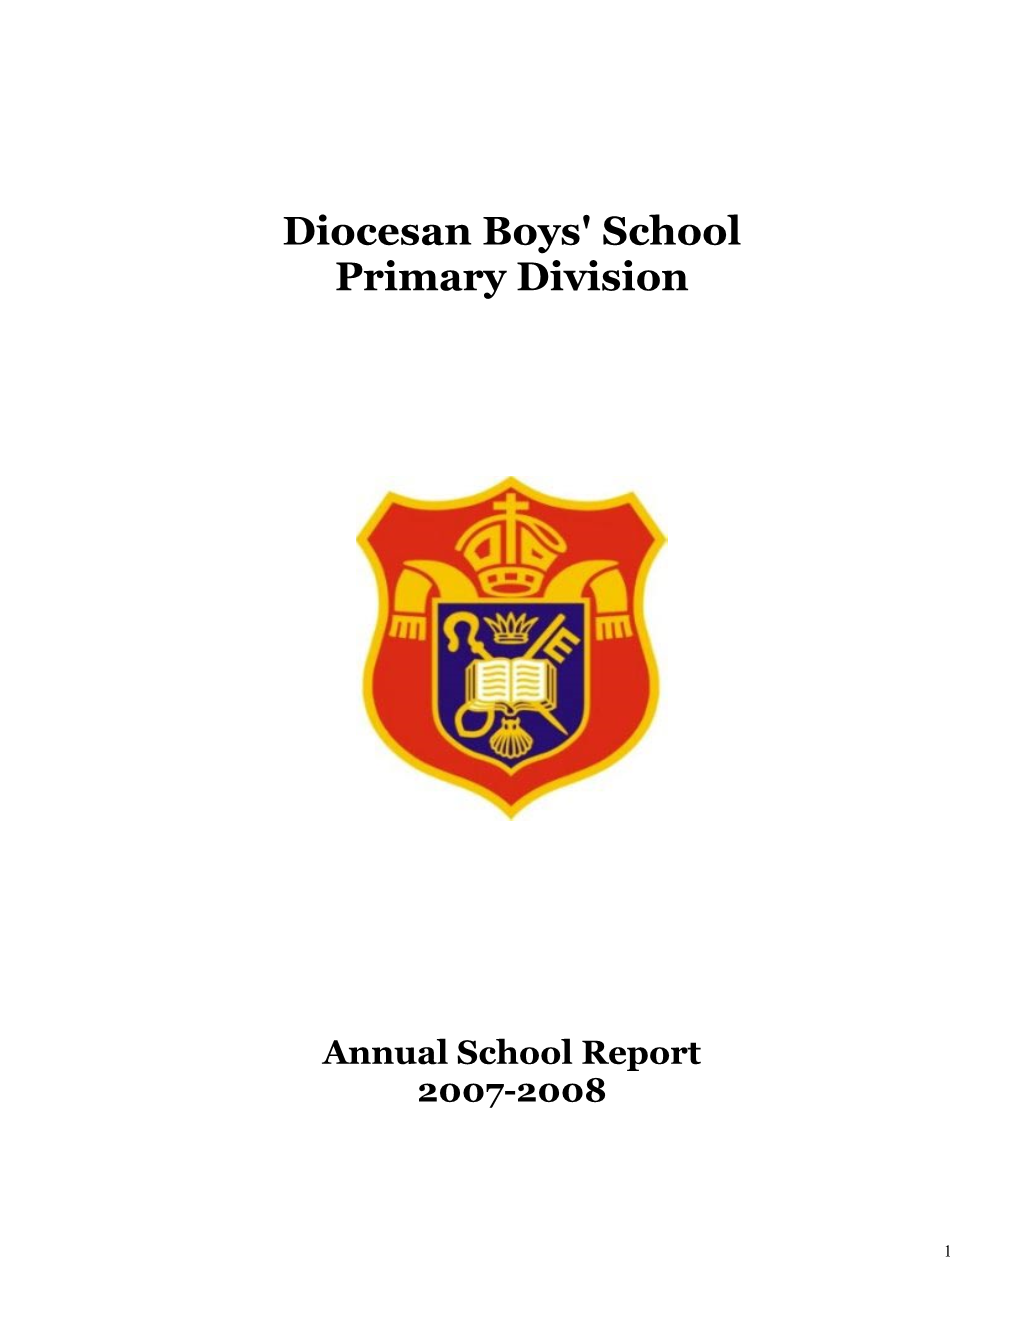 Annual School Report 2007-2008